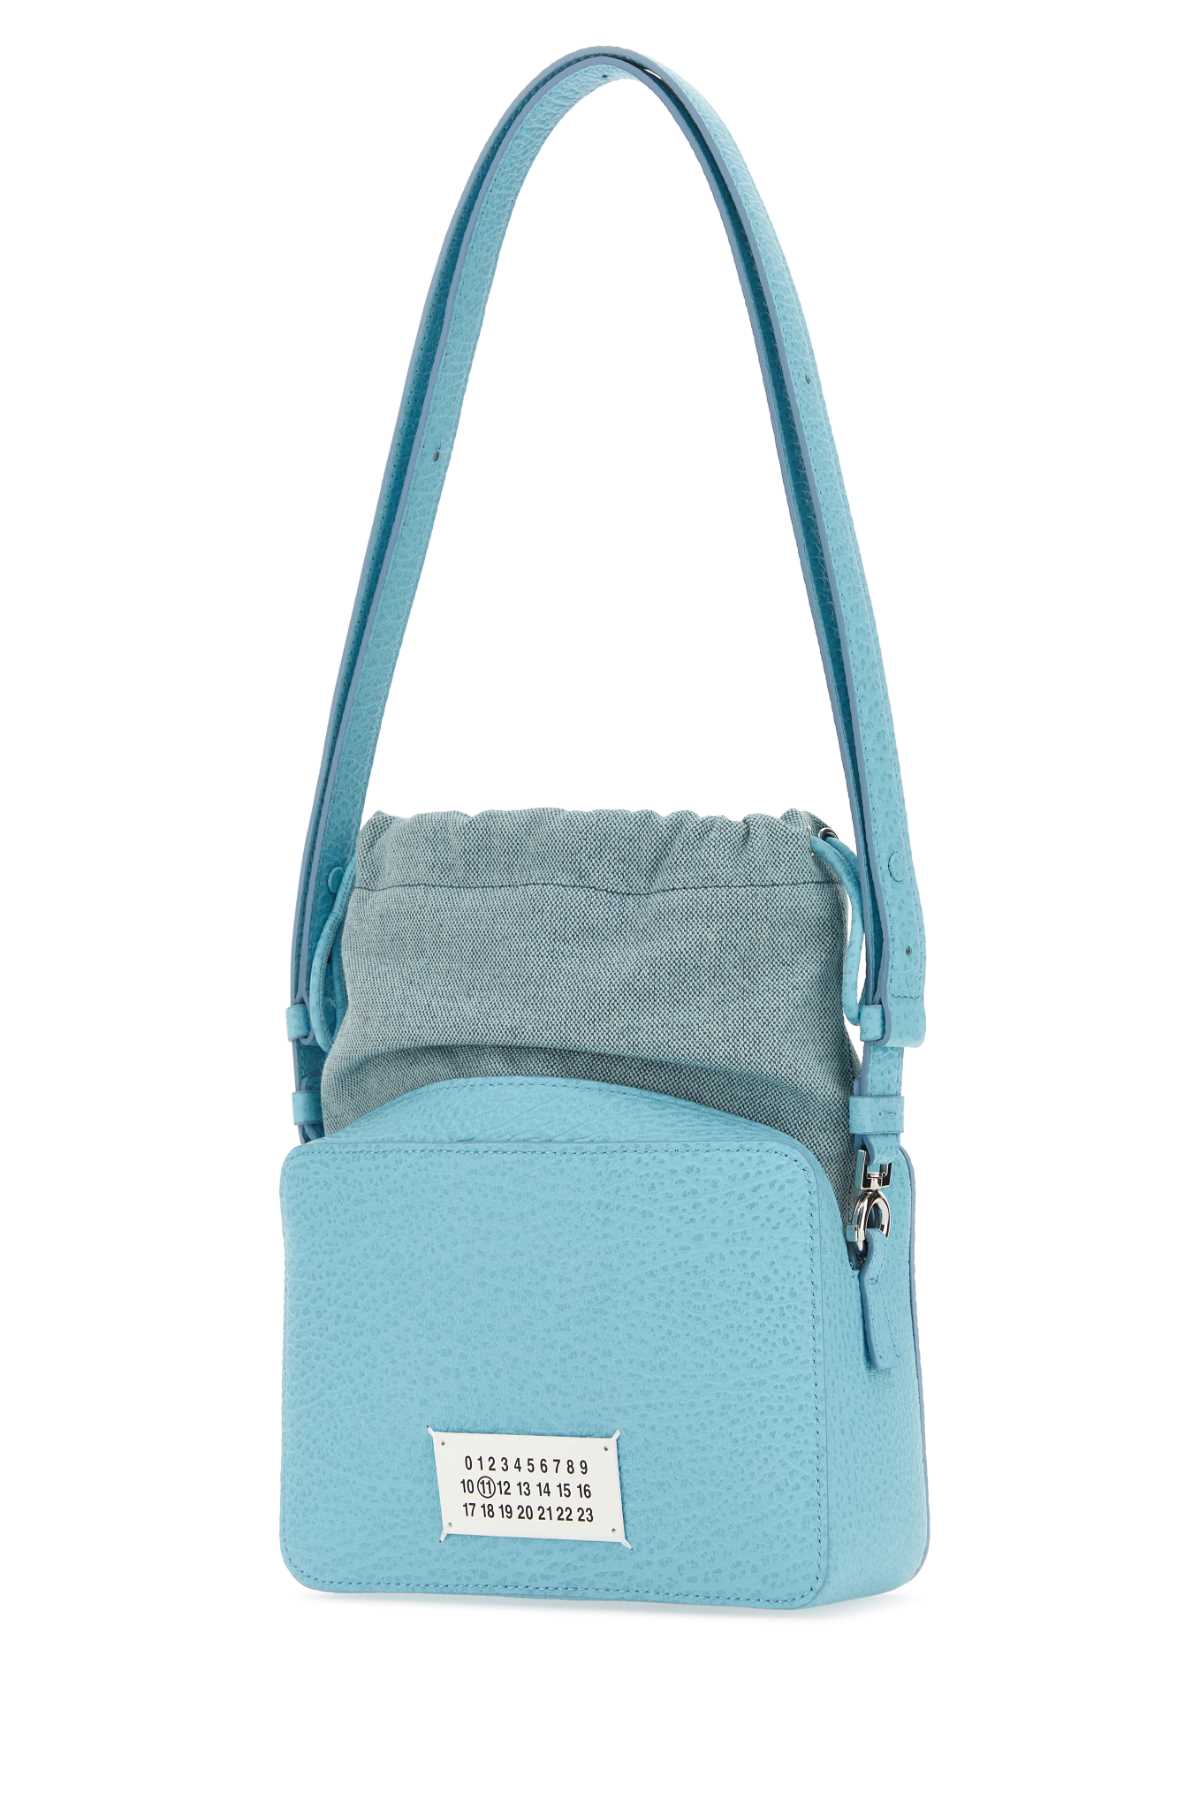 Maison Margiela Light Blue Leather And Fabric 5ac Bucket Bag In Aqua